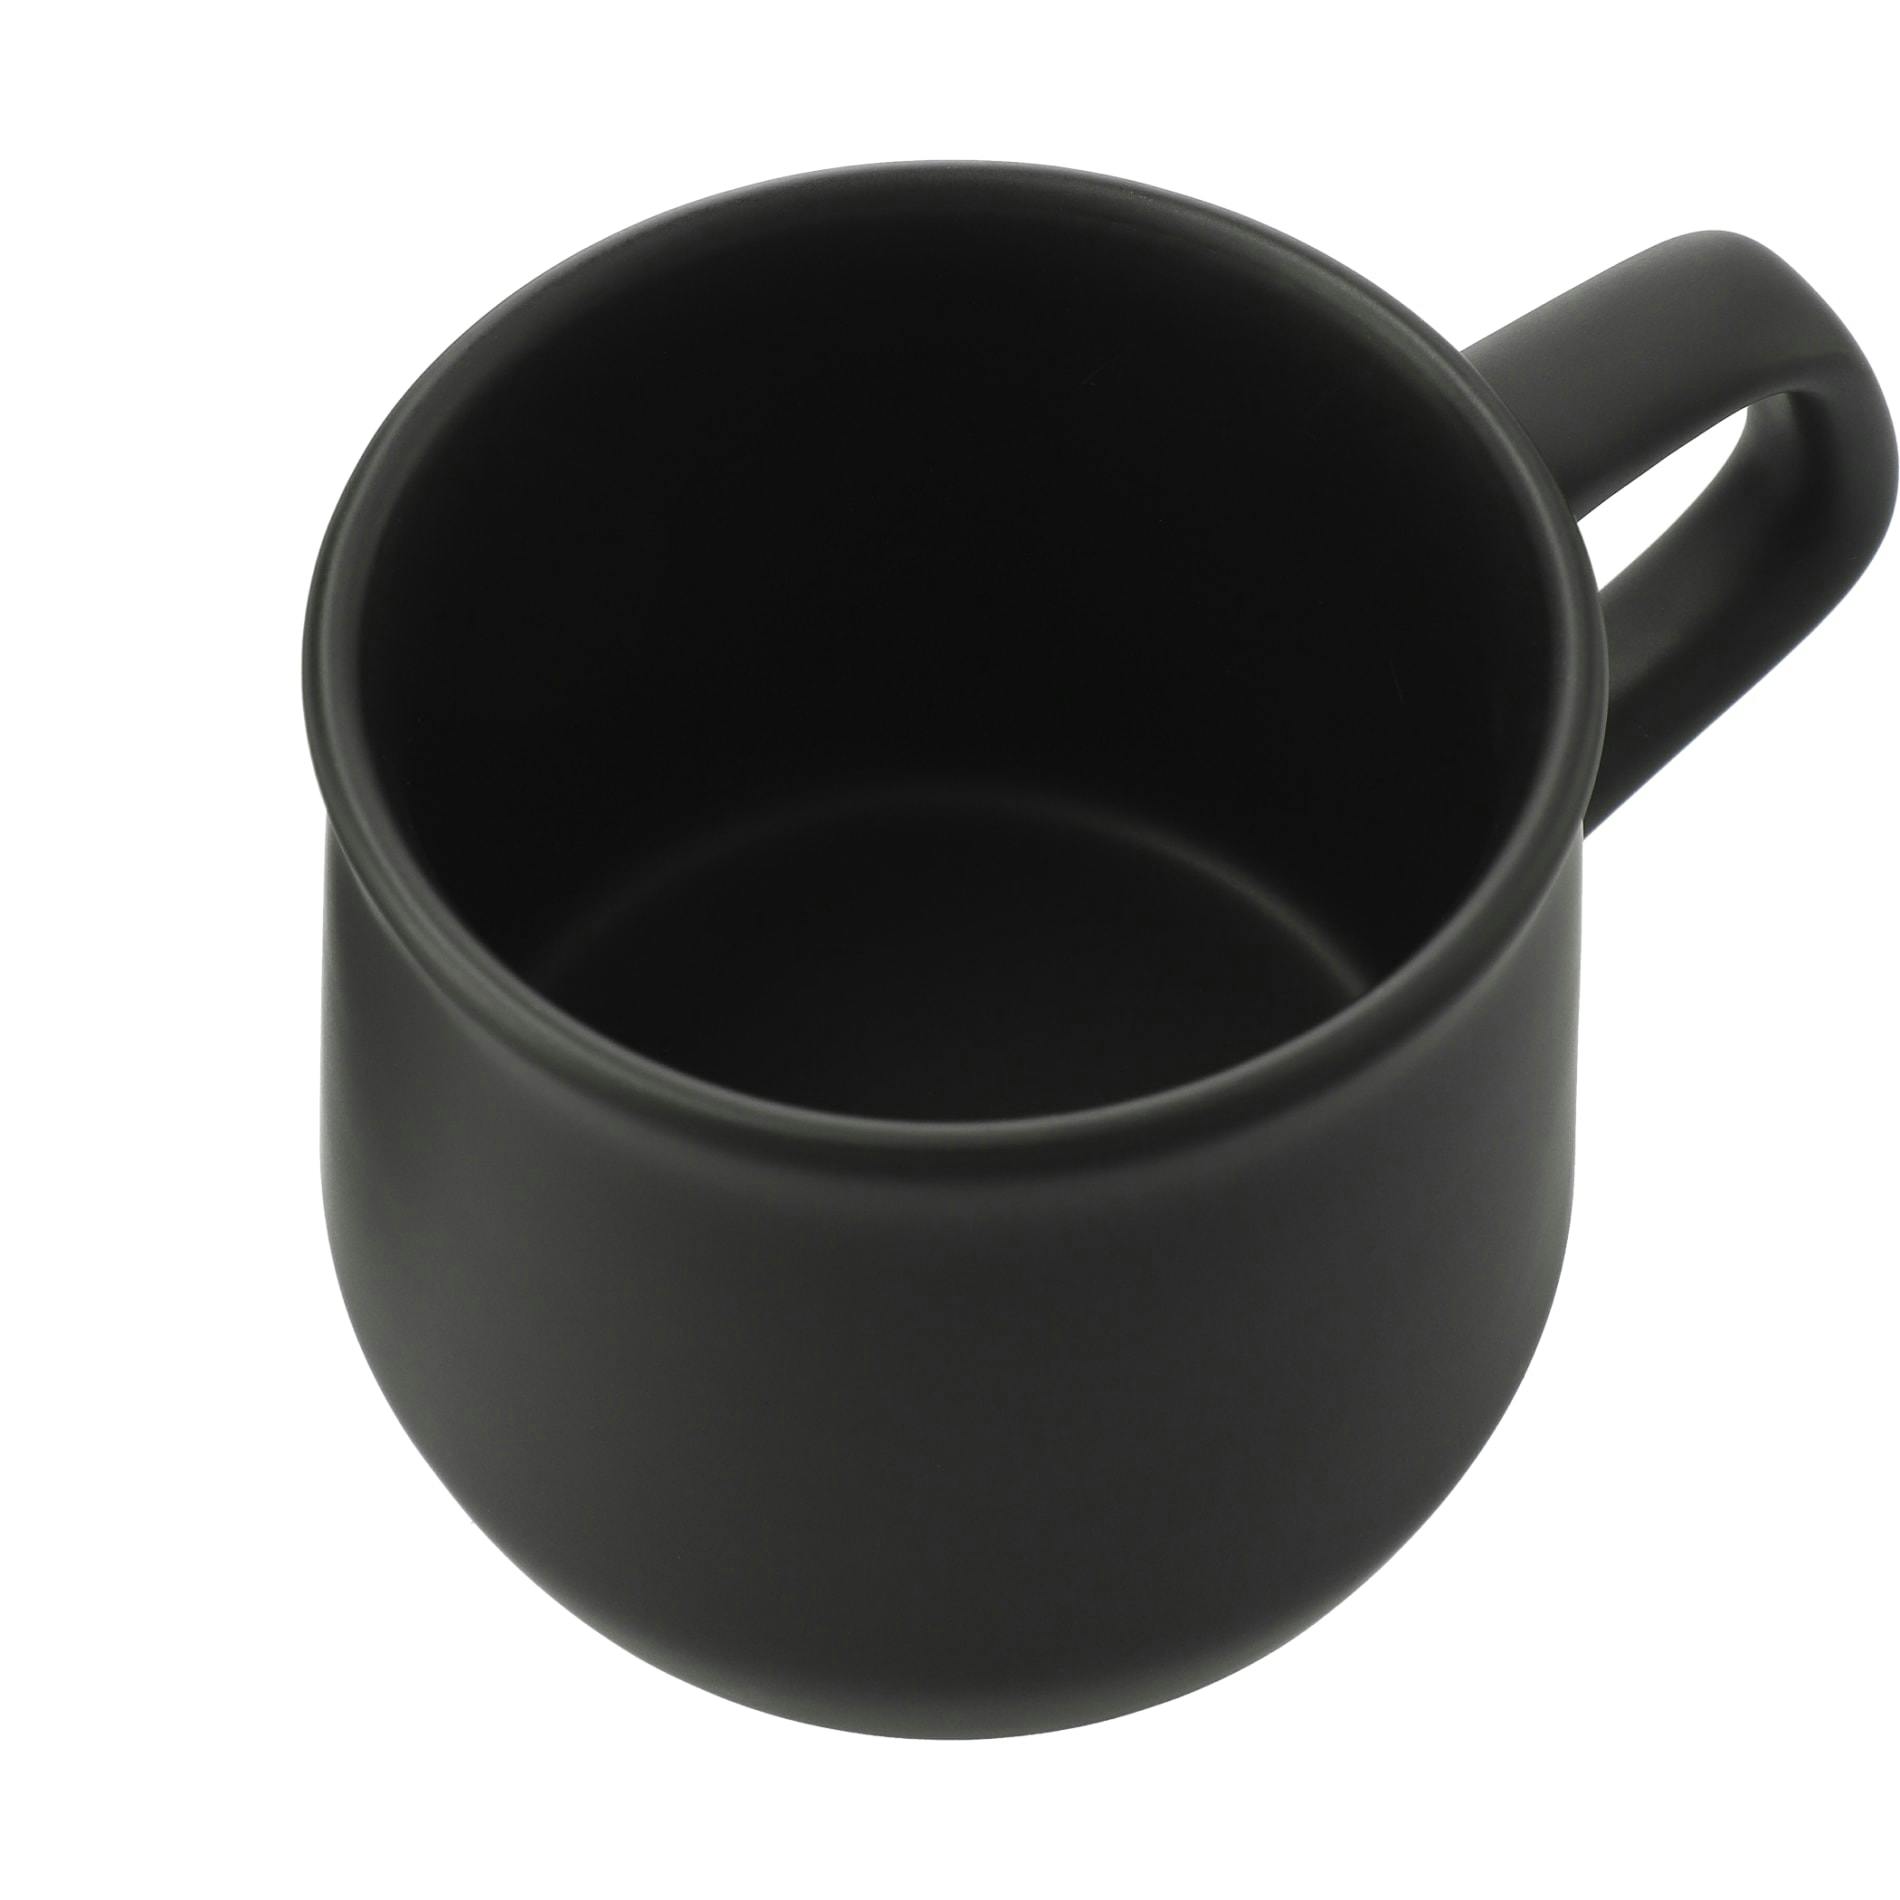 Angus 12oz Ceramic Mug - additional Image 1